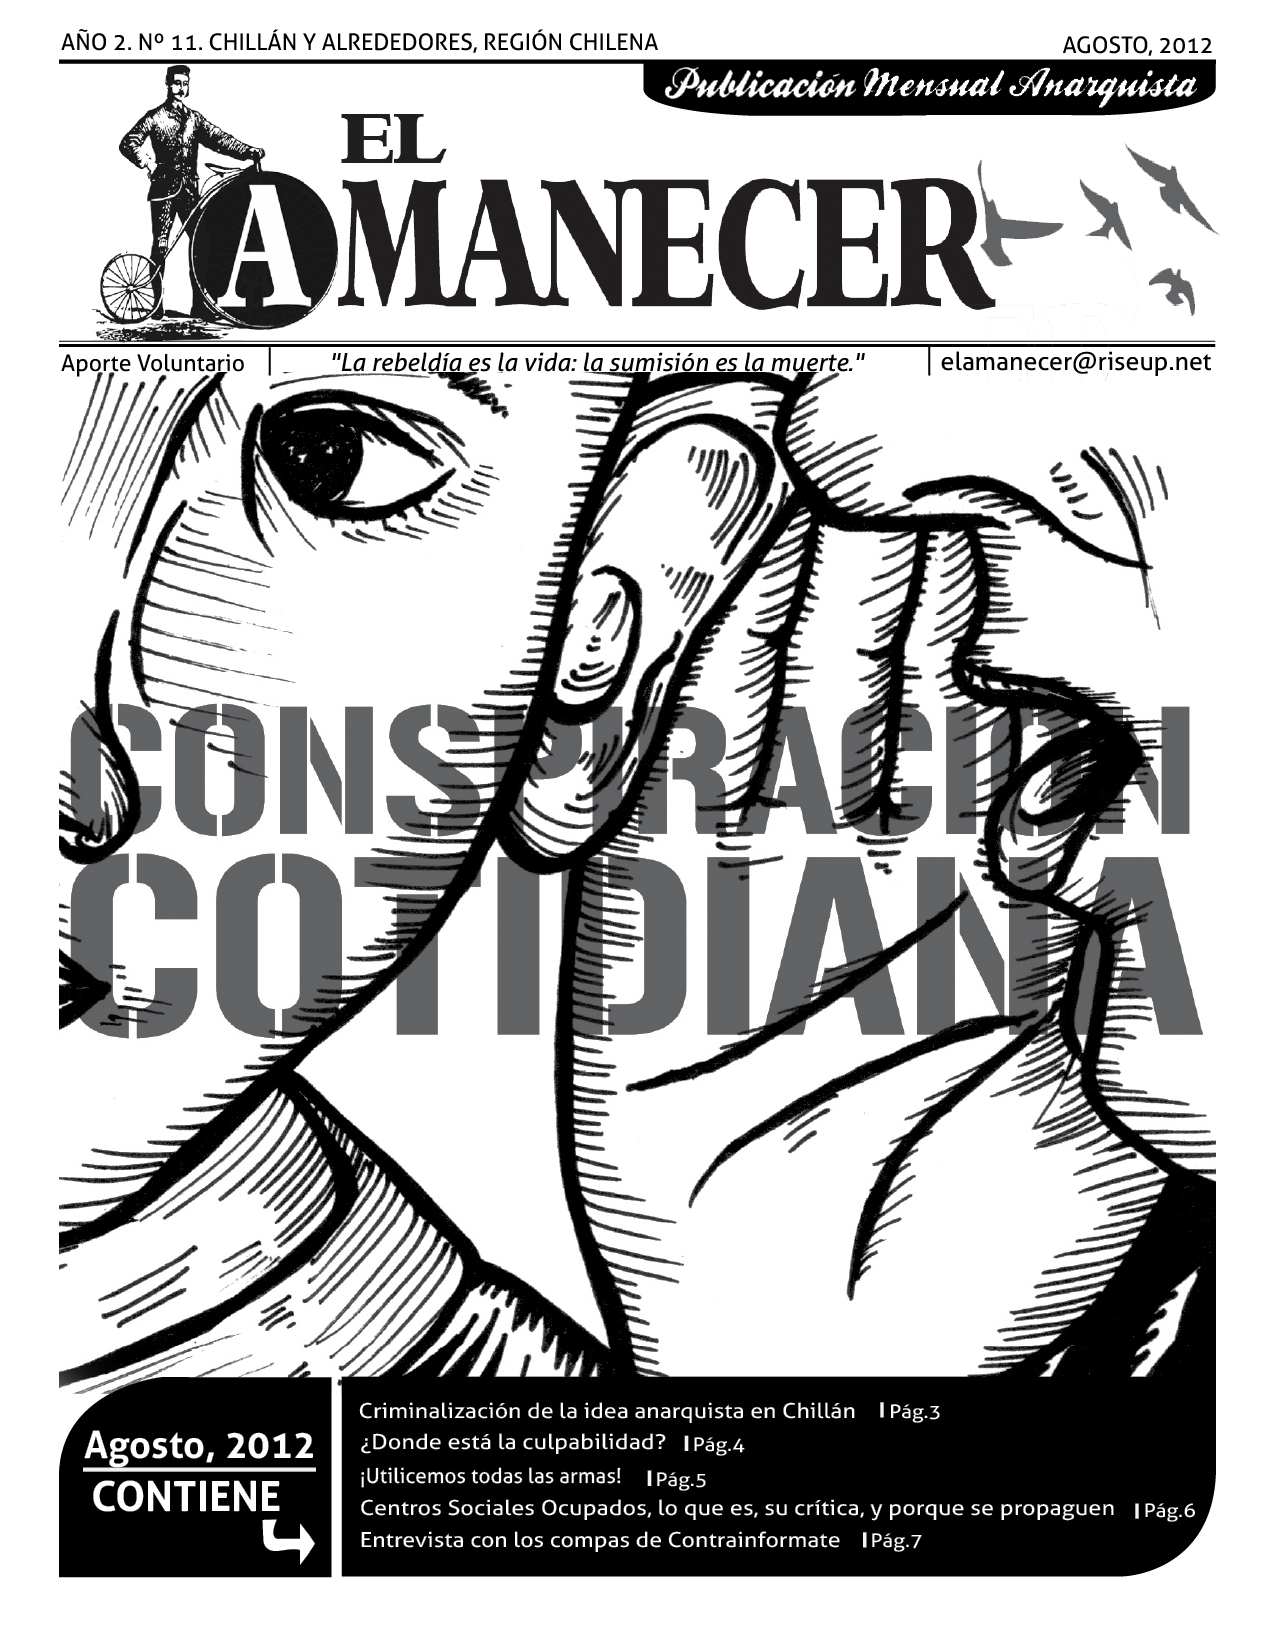 http://periodicoelamanecer.files.wordpress.com/2012/08/periodico-anarquista-el-amanecer-agosto-2012.jpg